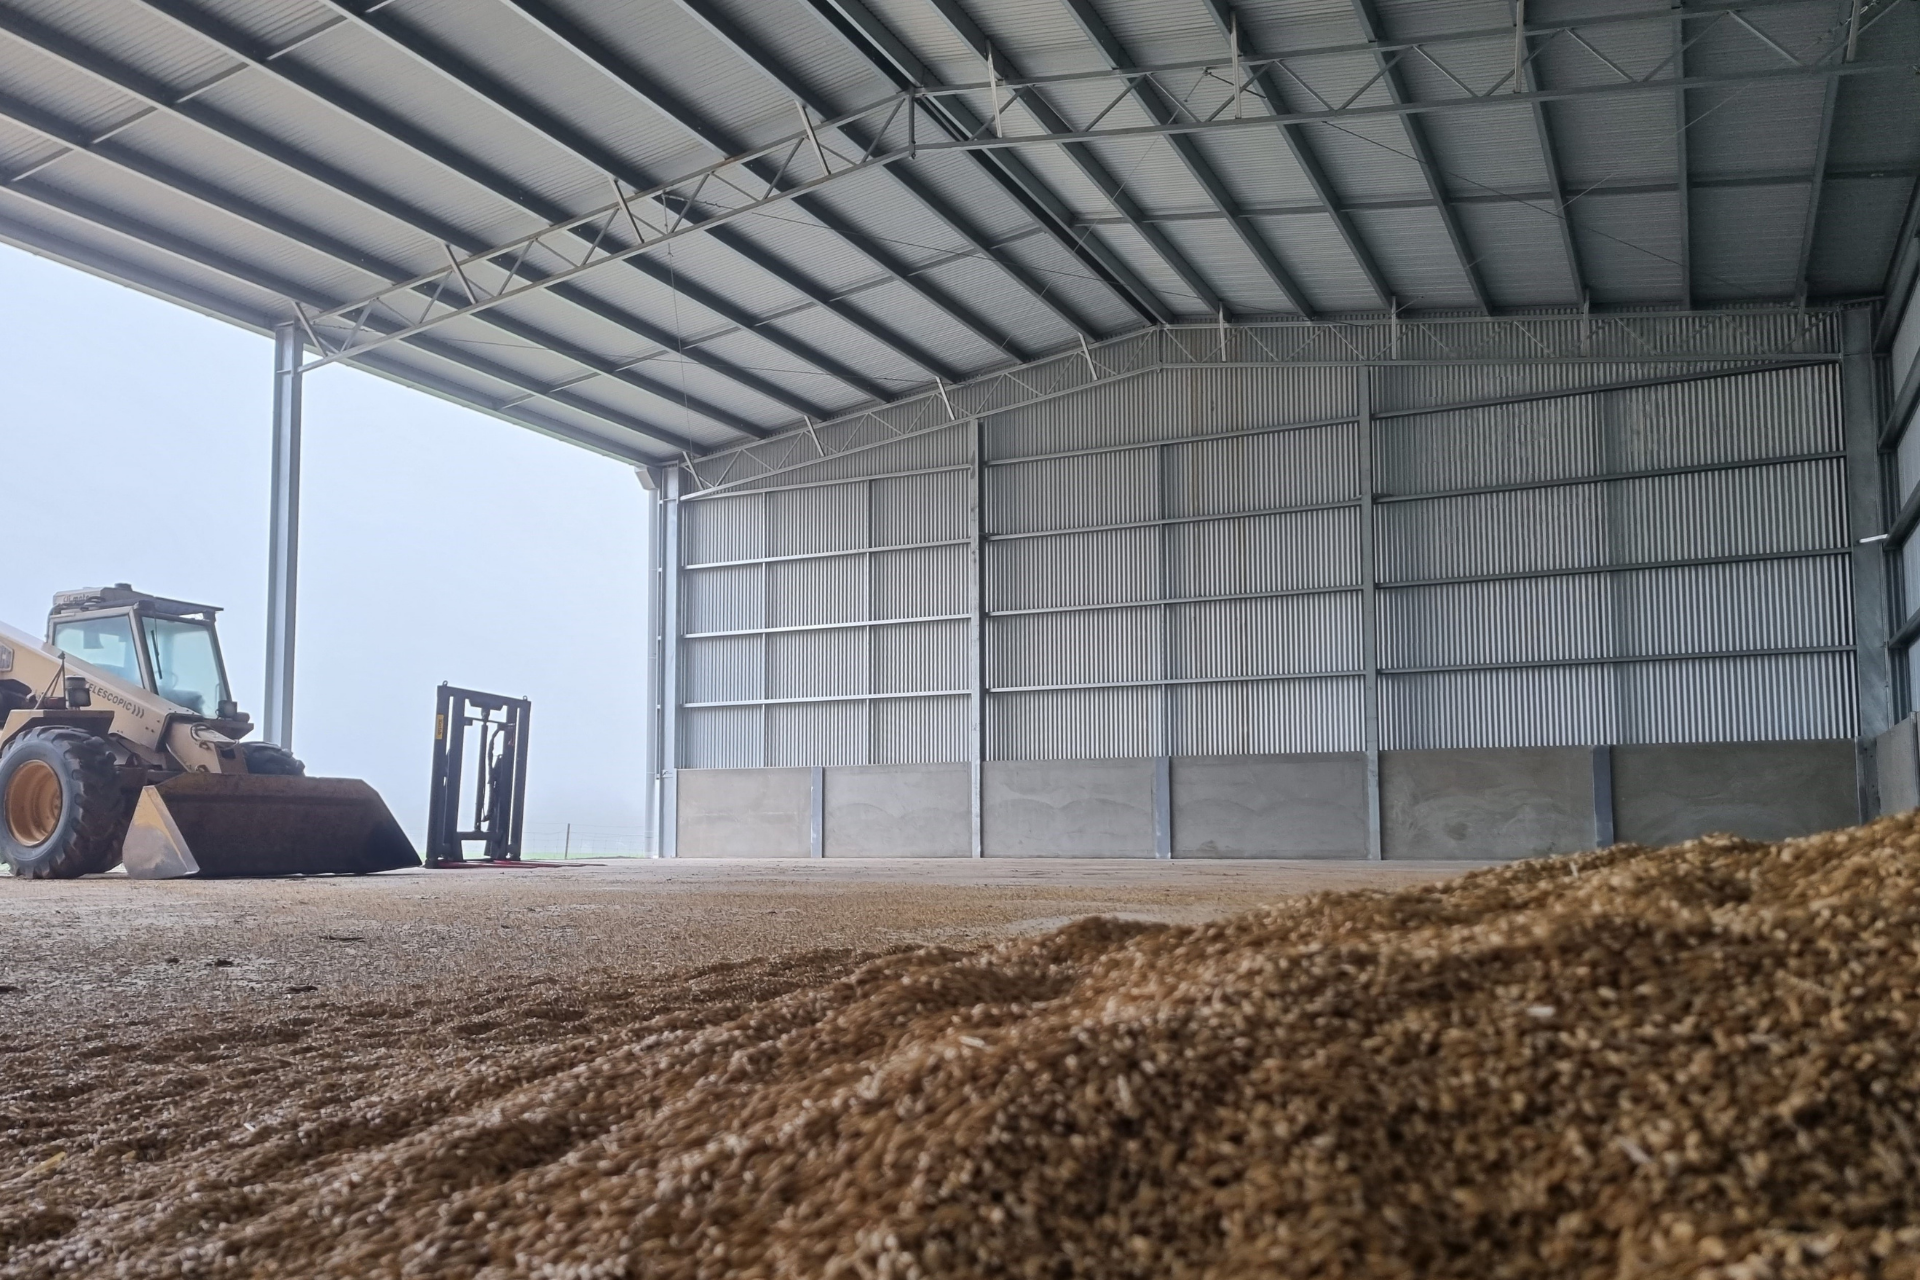 A 24m x 18m x 6.75m fertiliser shed with concrete panel walls at Wareek VIC